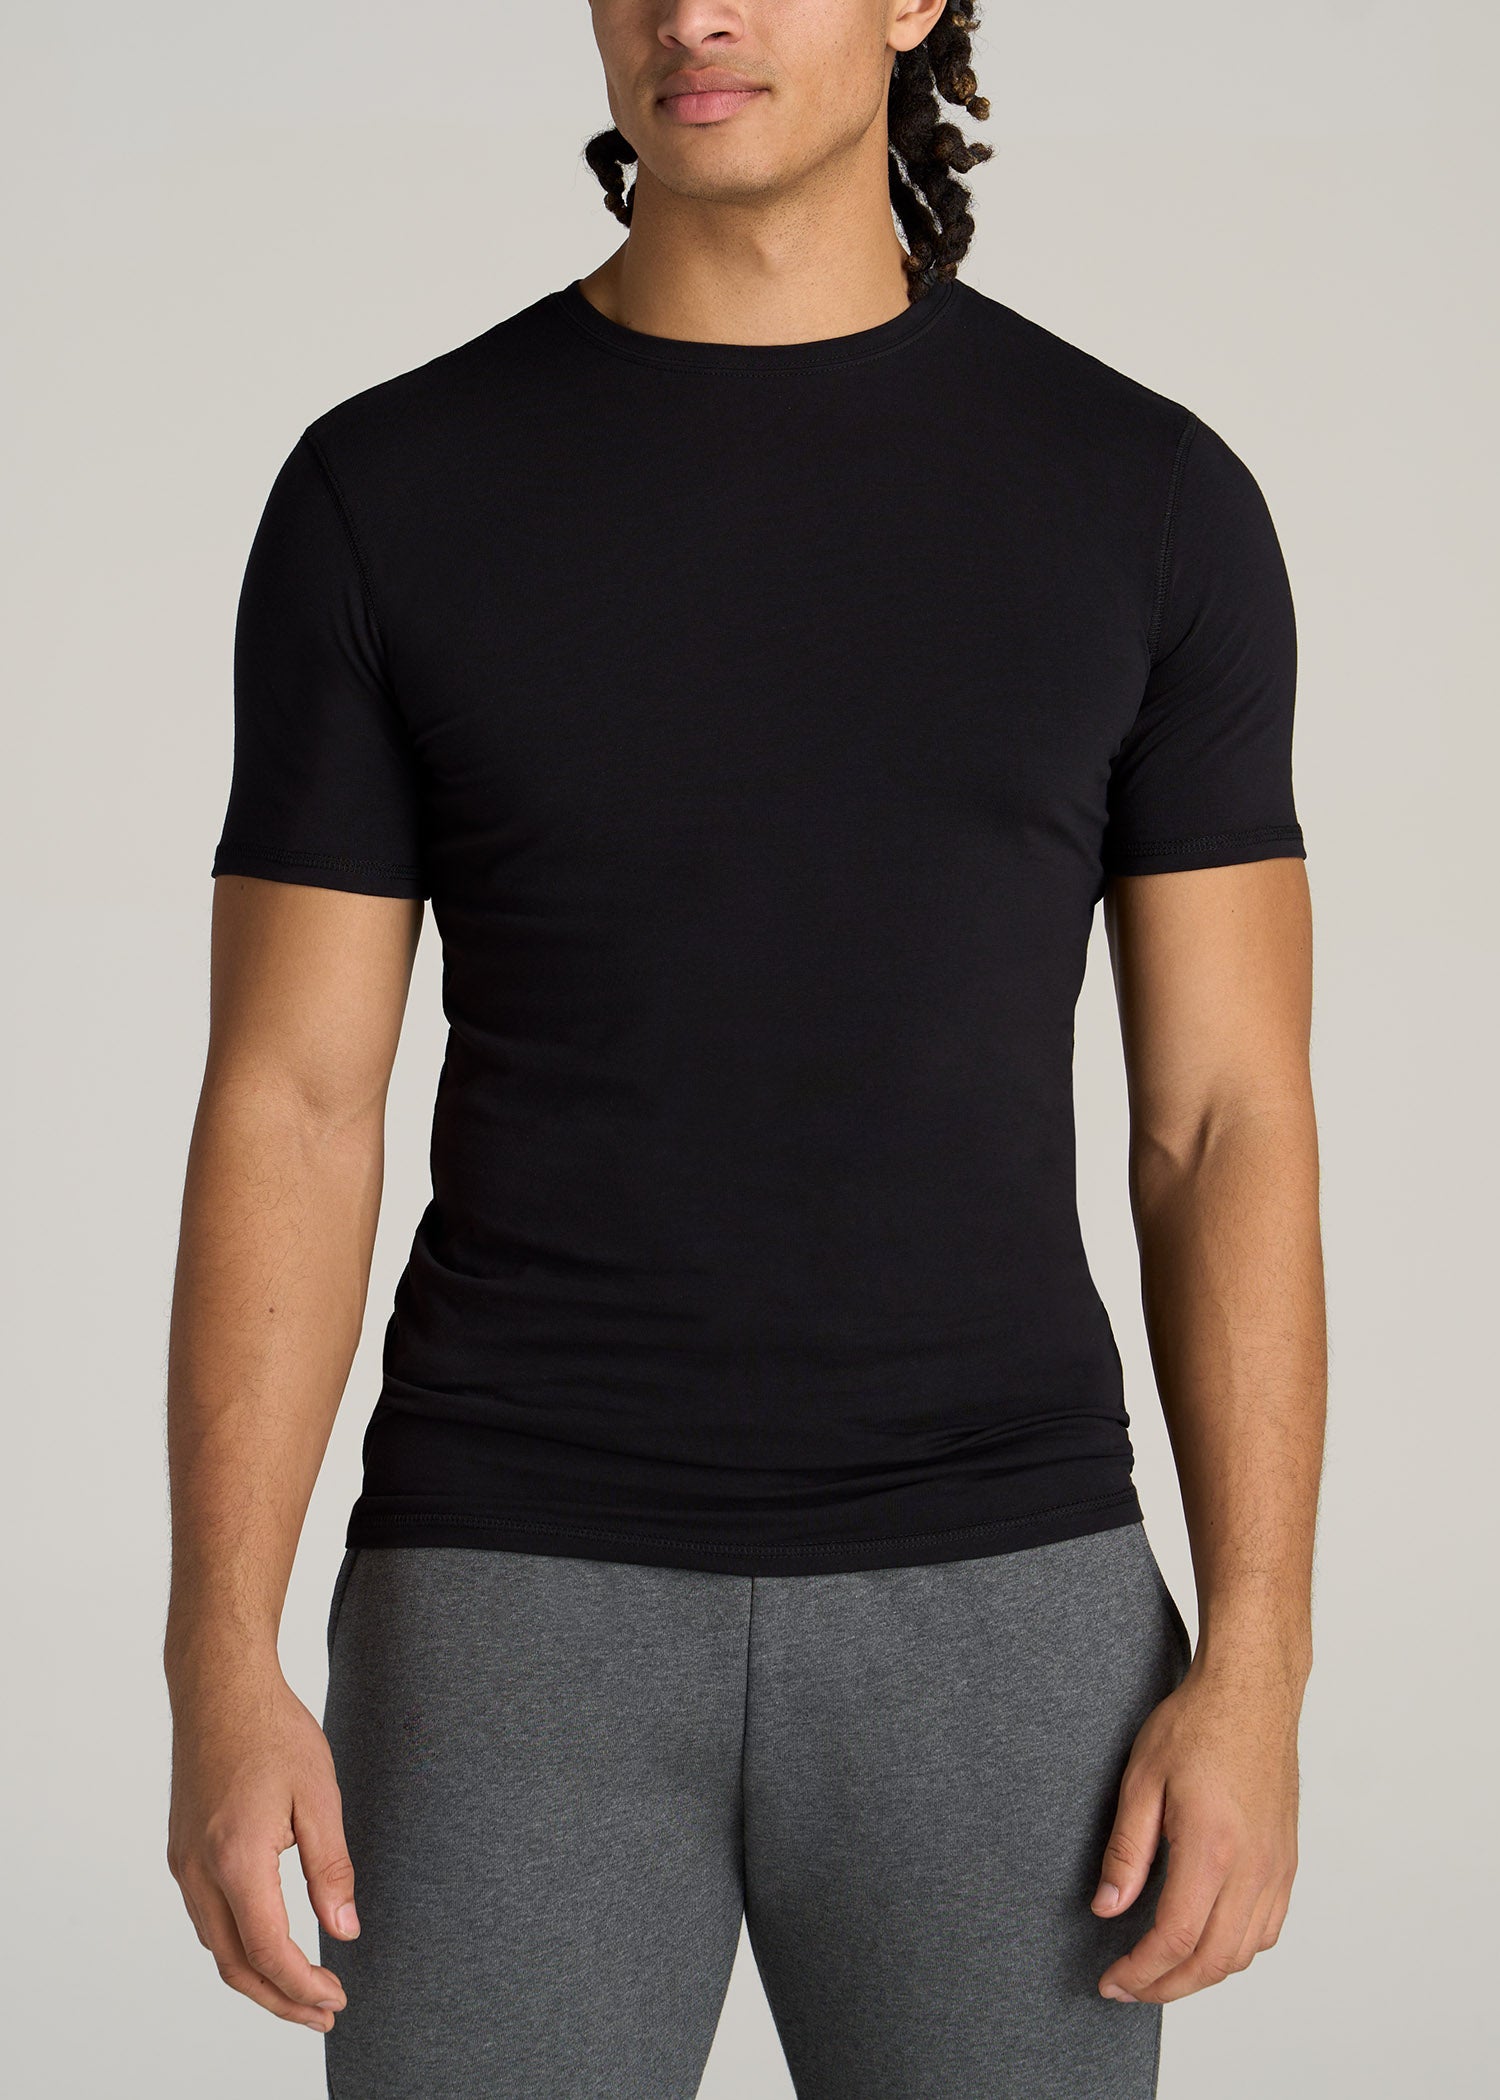 lemmer Serena afregning Slim Fit Black T-Shirt | Tall Men's Essentials | American Tall